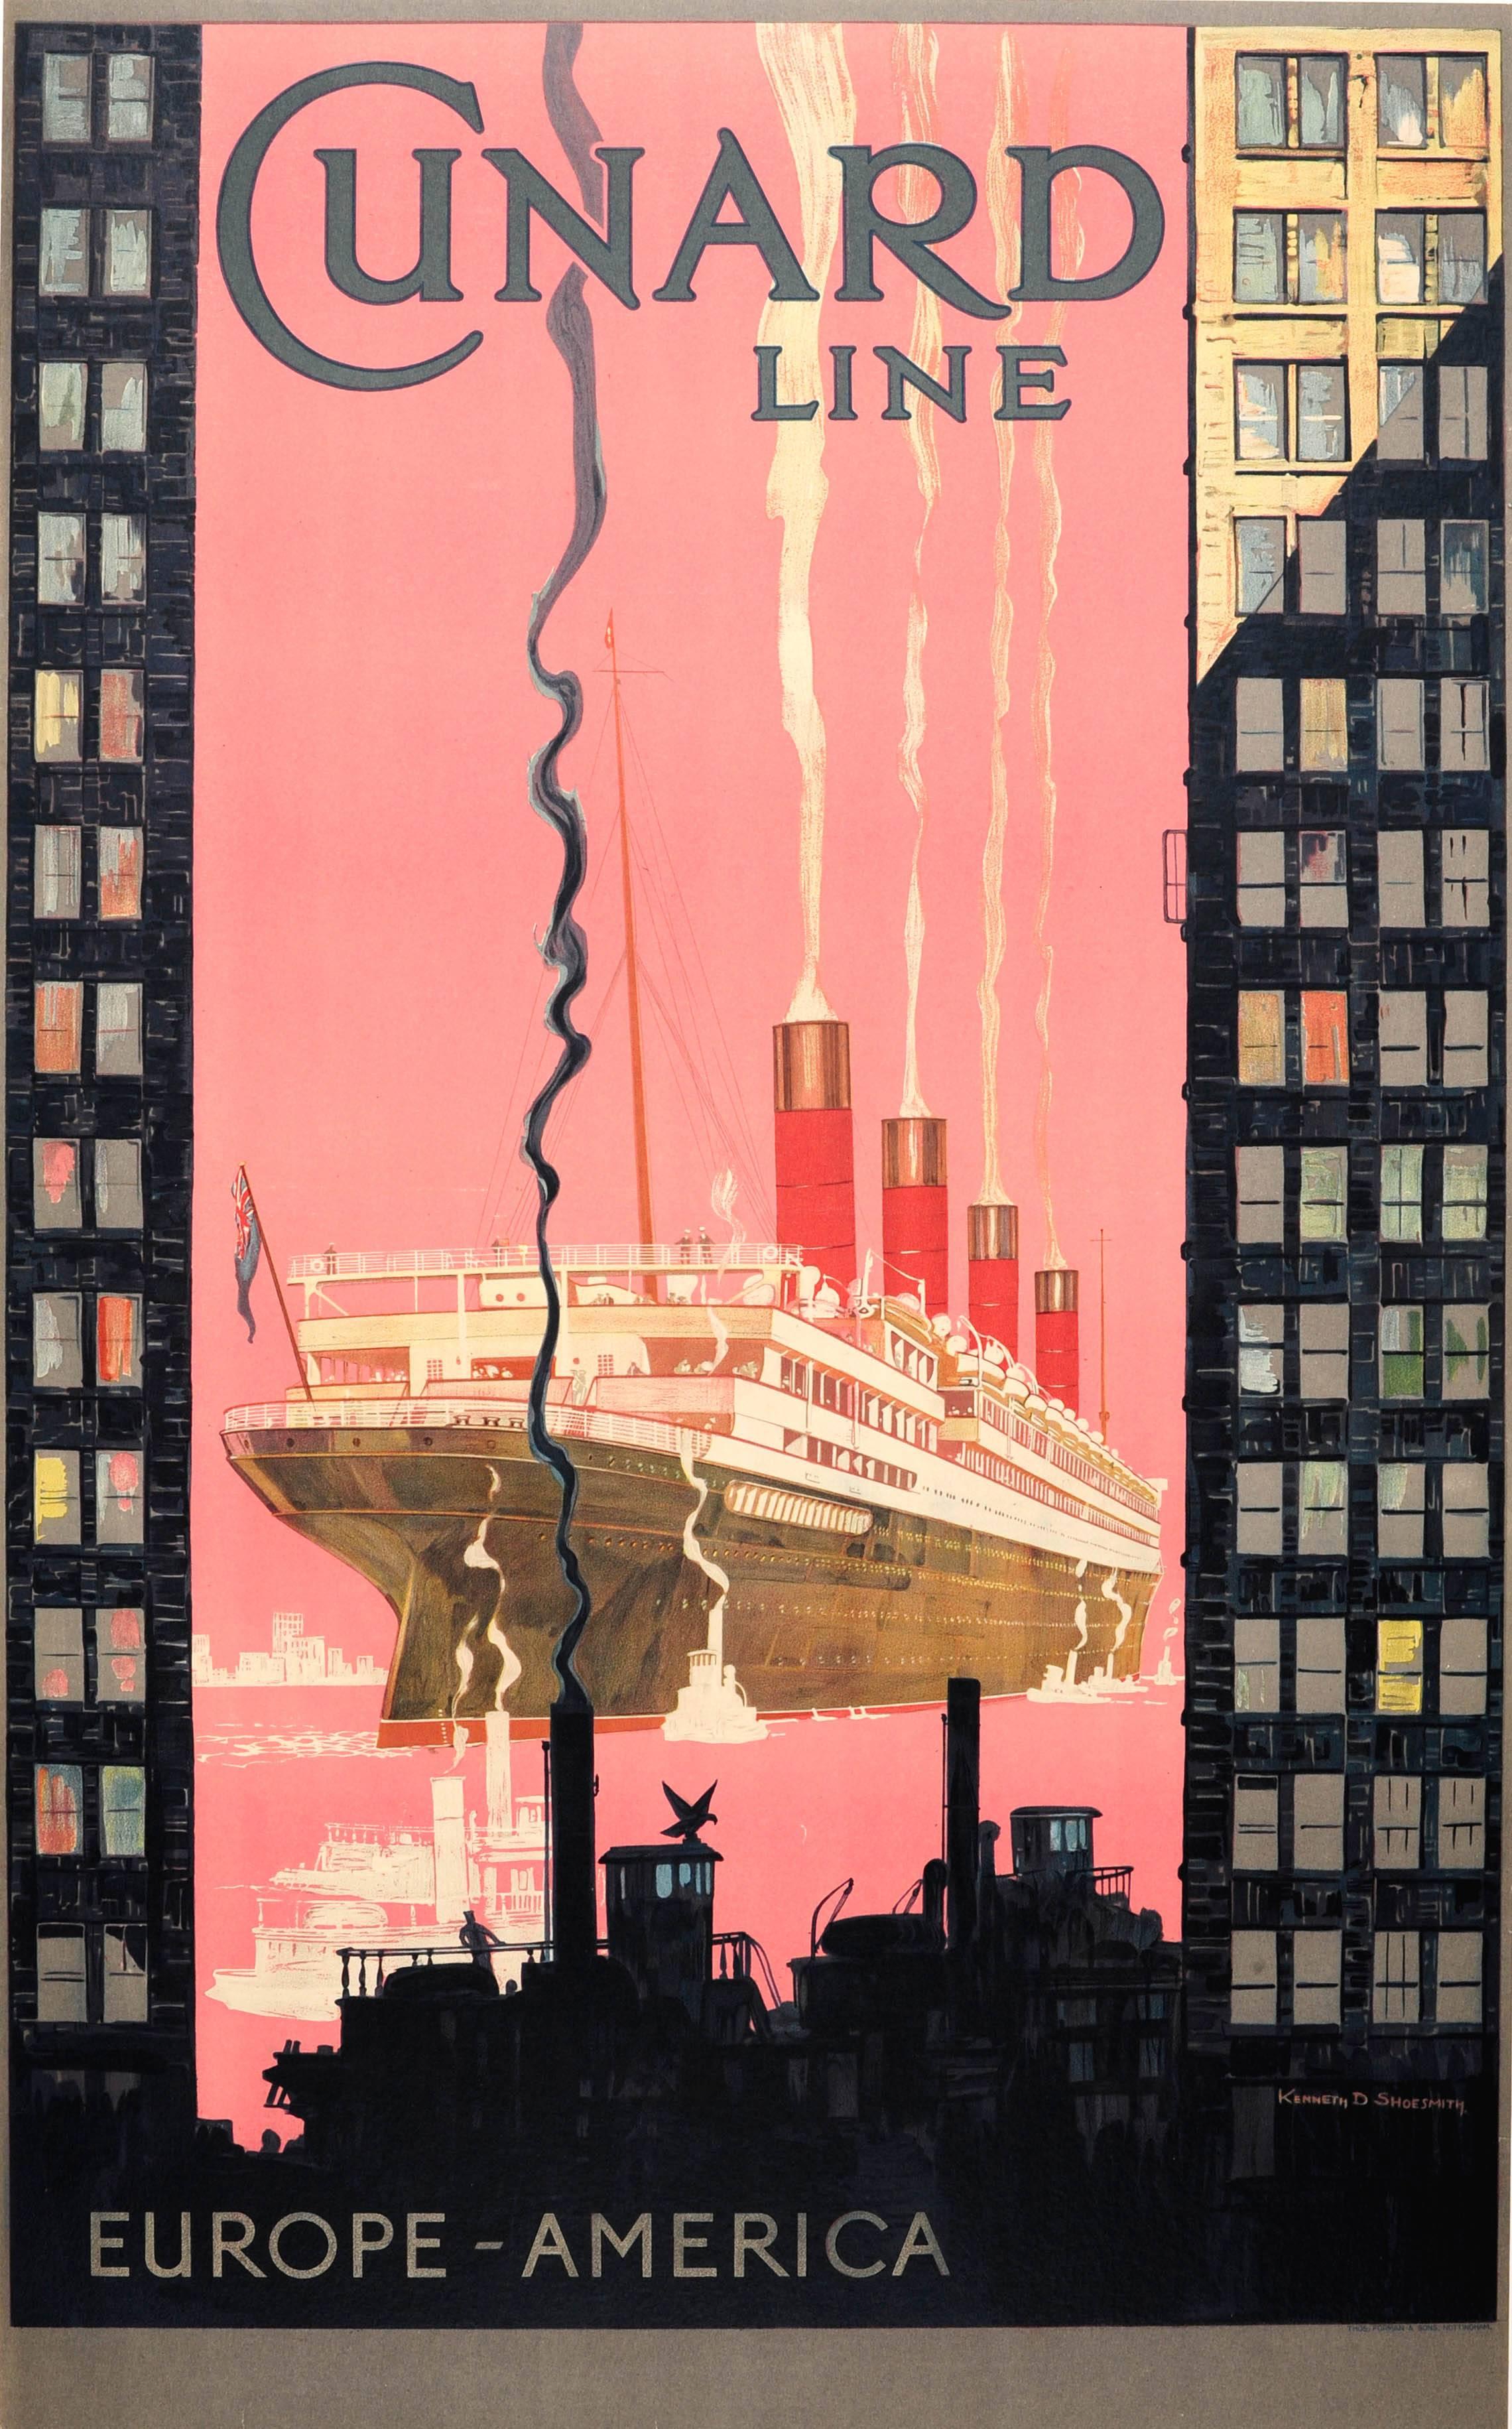 Kenneth Denton Shoesmith Print - Original 1925 Cruise Ship Poster By KD Shoesmith - Cunard Line Europe - America